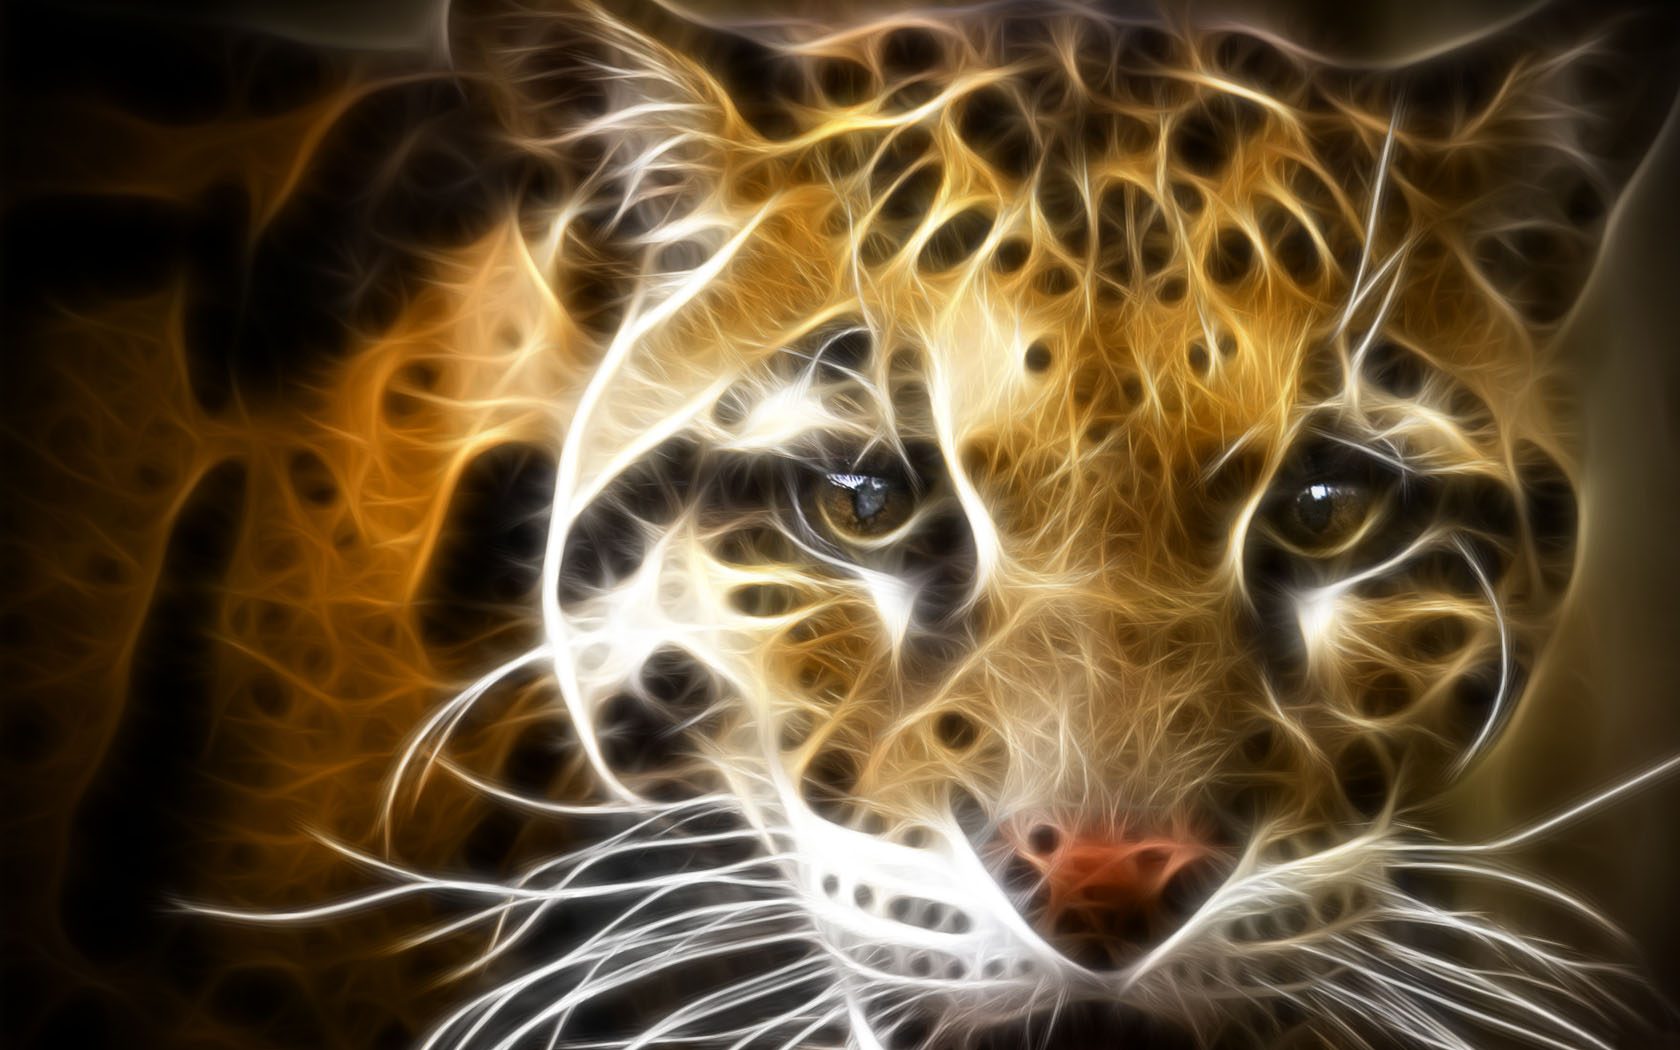 leopard desktop wallpapers free on latoro comlatorocomwallpapers 1680x1050